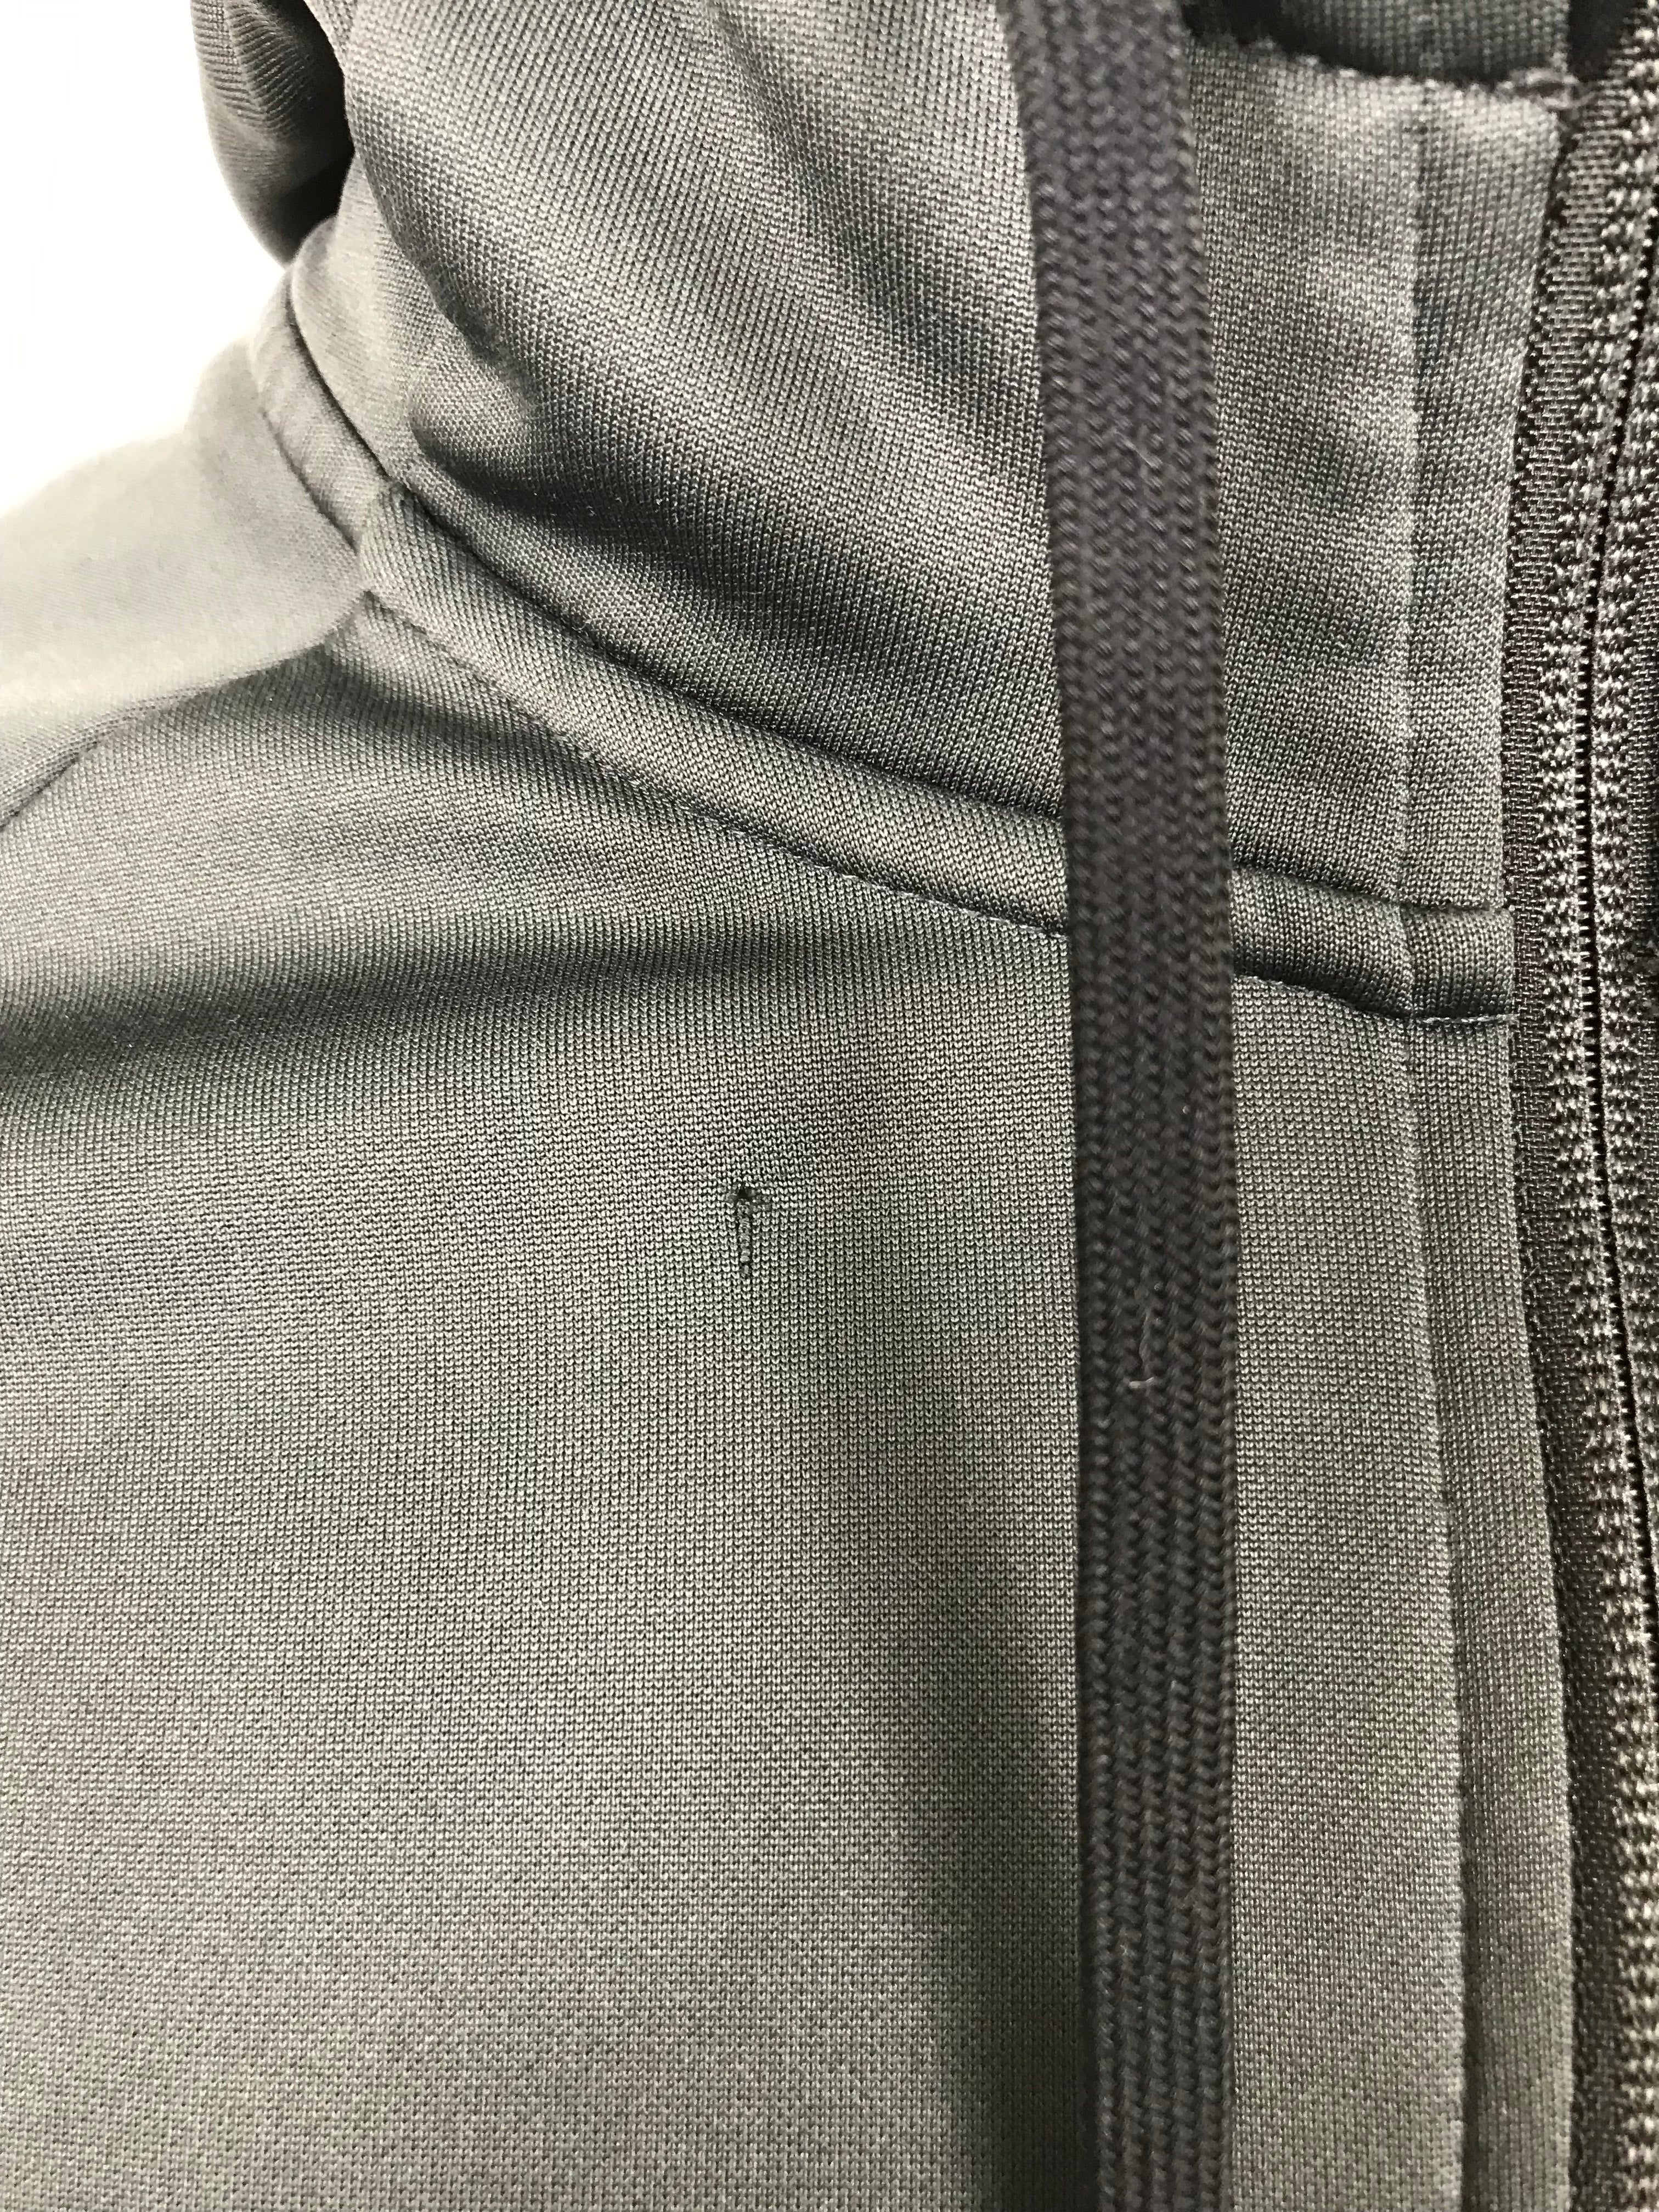 Nike Grey Zip-up Hoodie Men's Size L